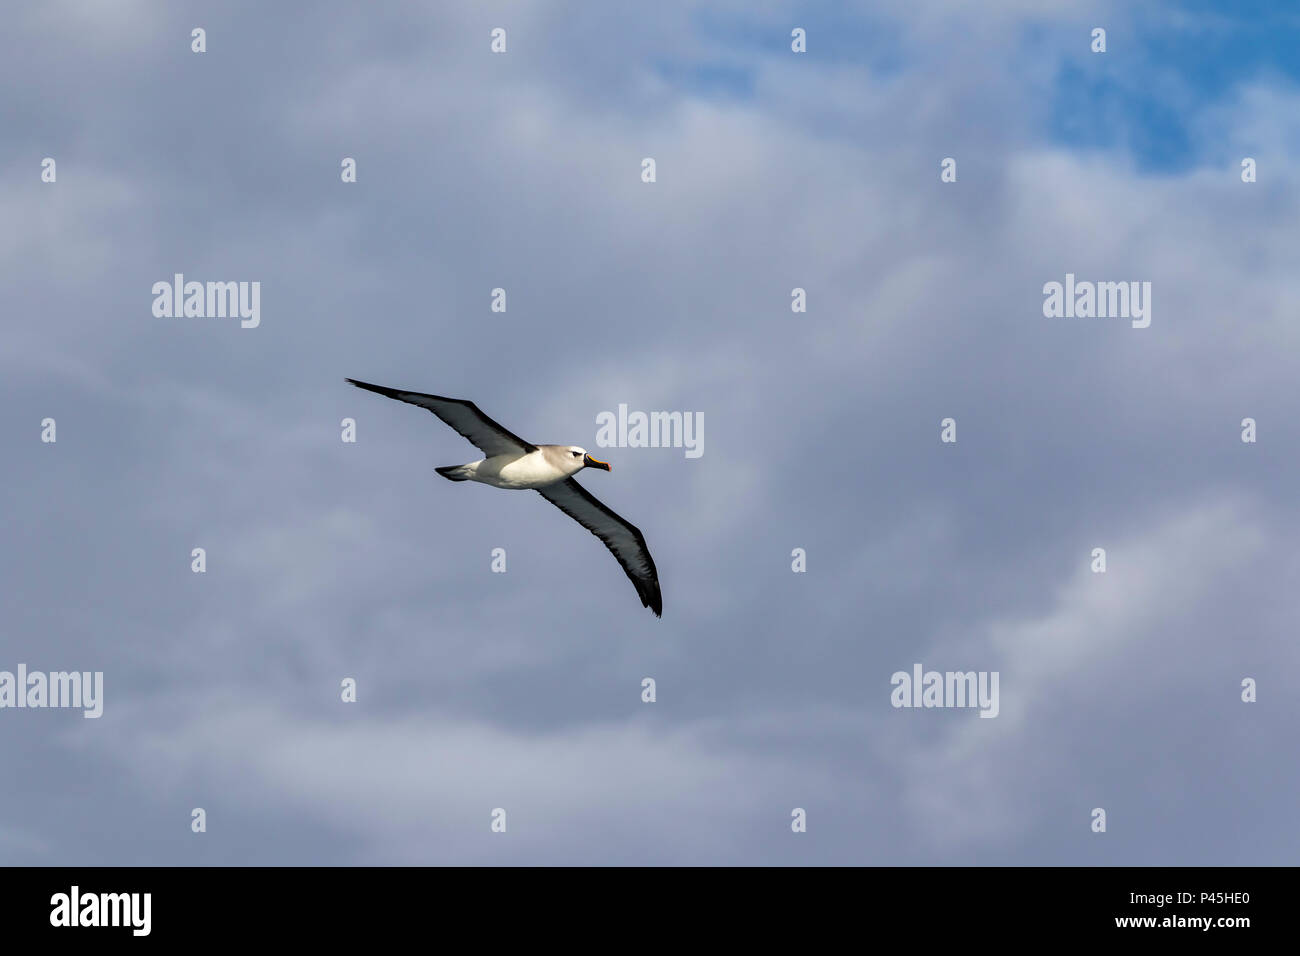 Atlantic gelb - gerochen Albatross im Flug, Tristan da Cunha Archipel Stockfoto